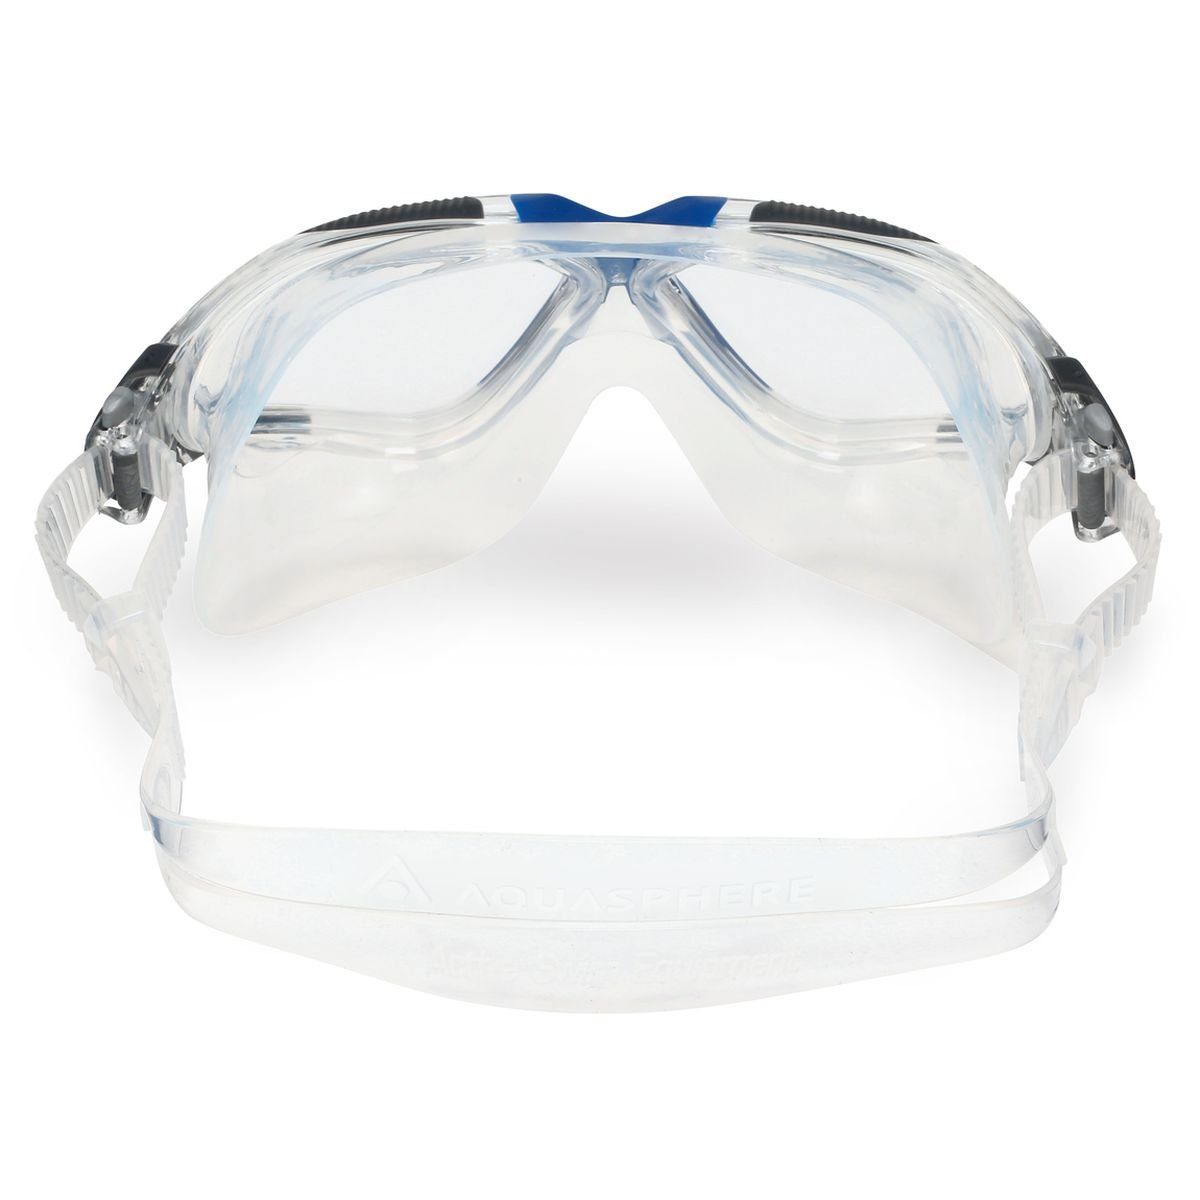 Schwimmaske transparent/blau Aquasphere Vista Schwimmbrille